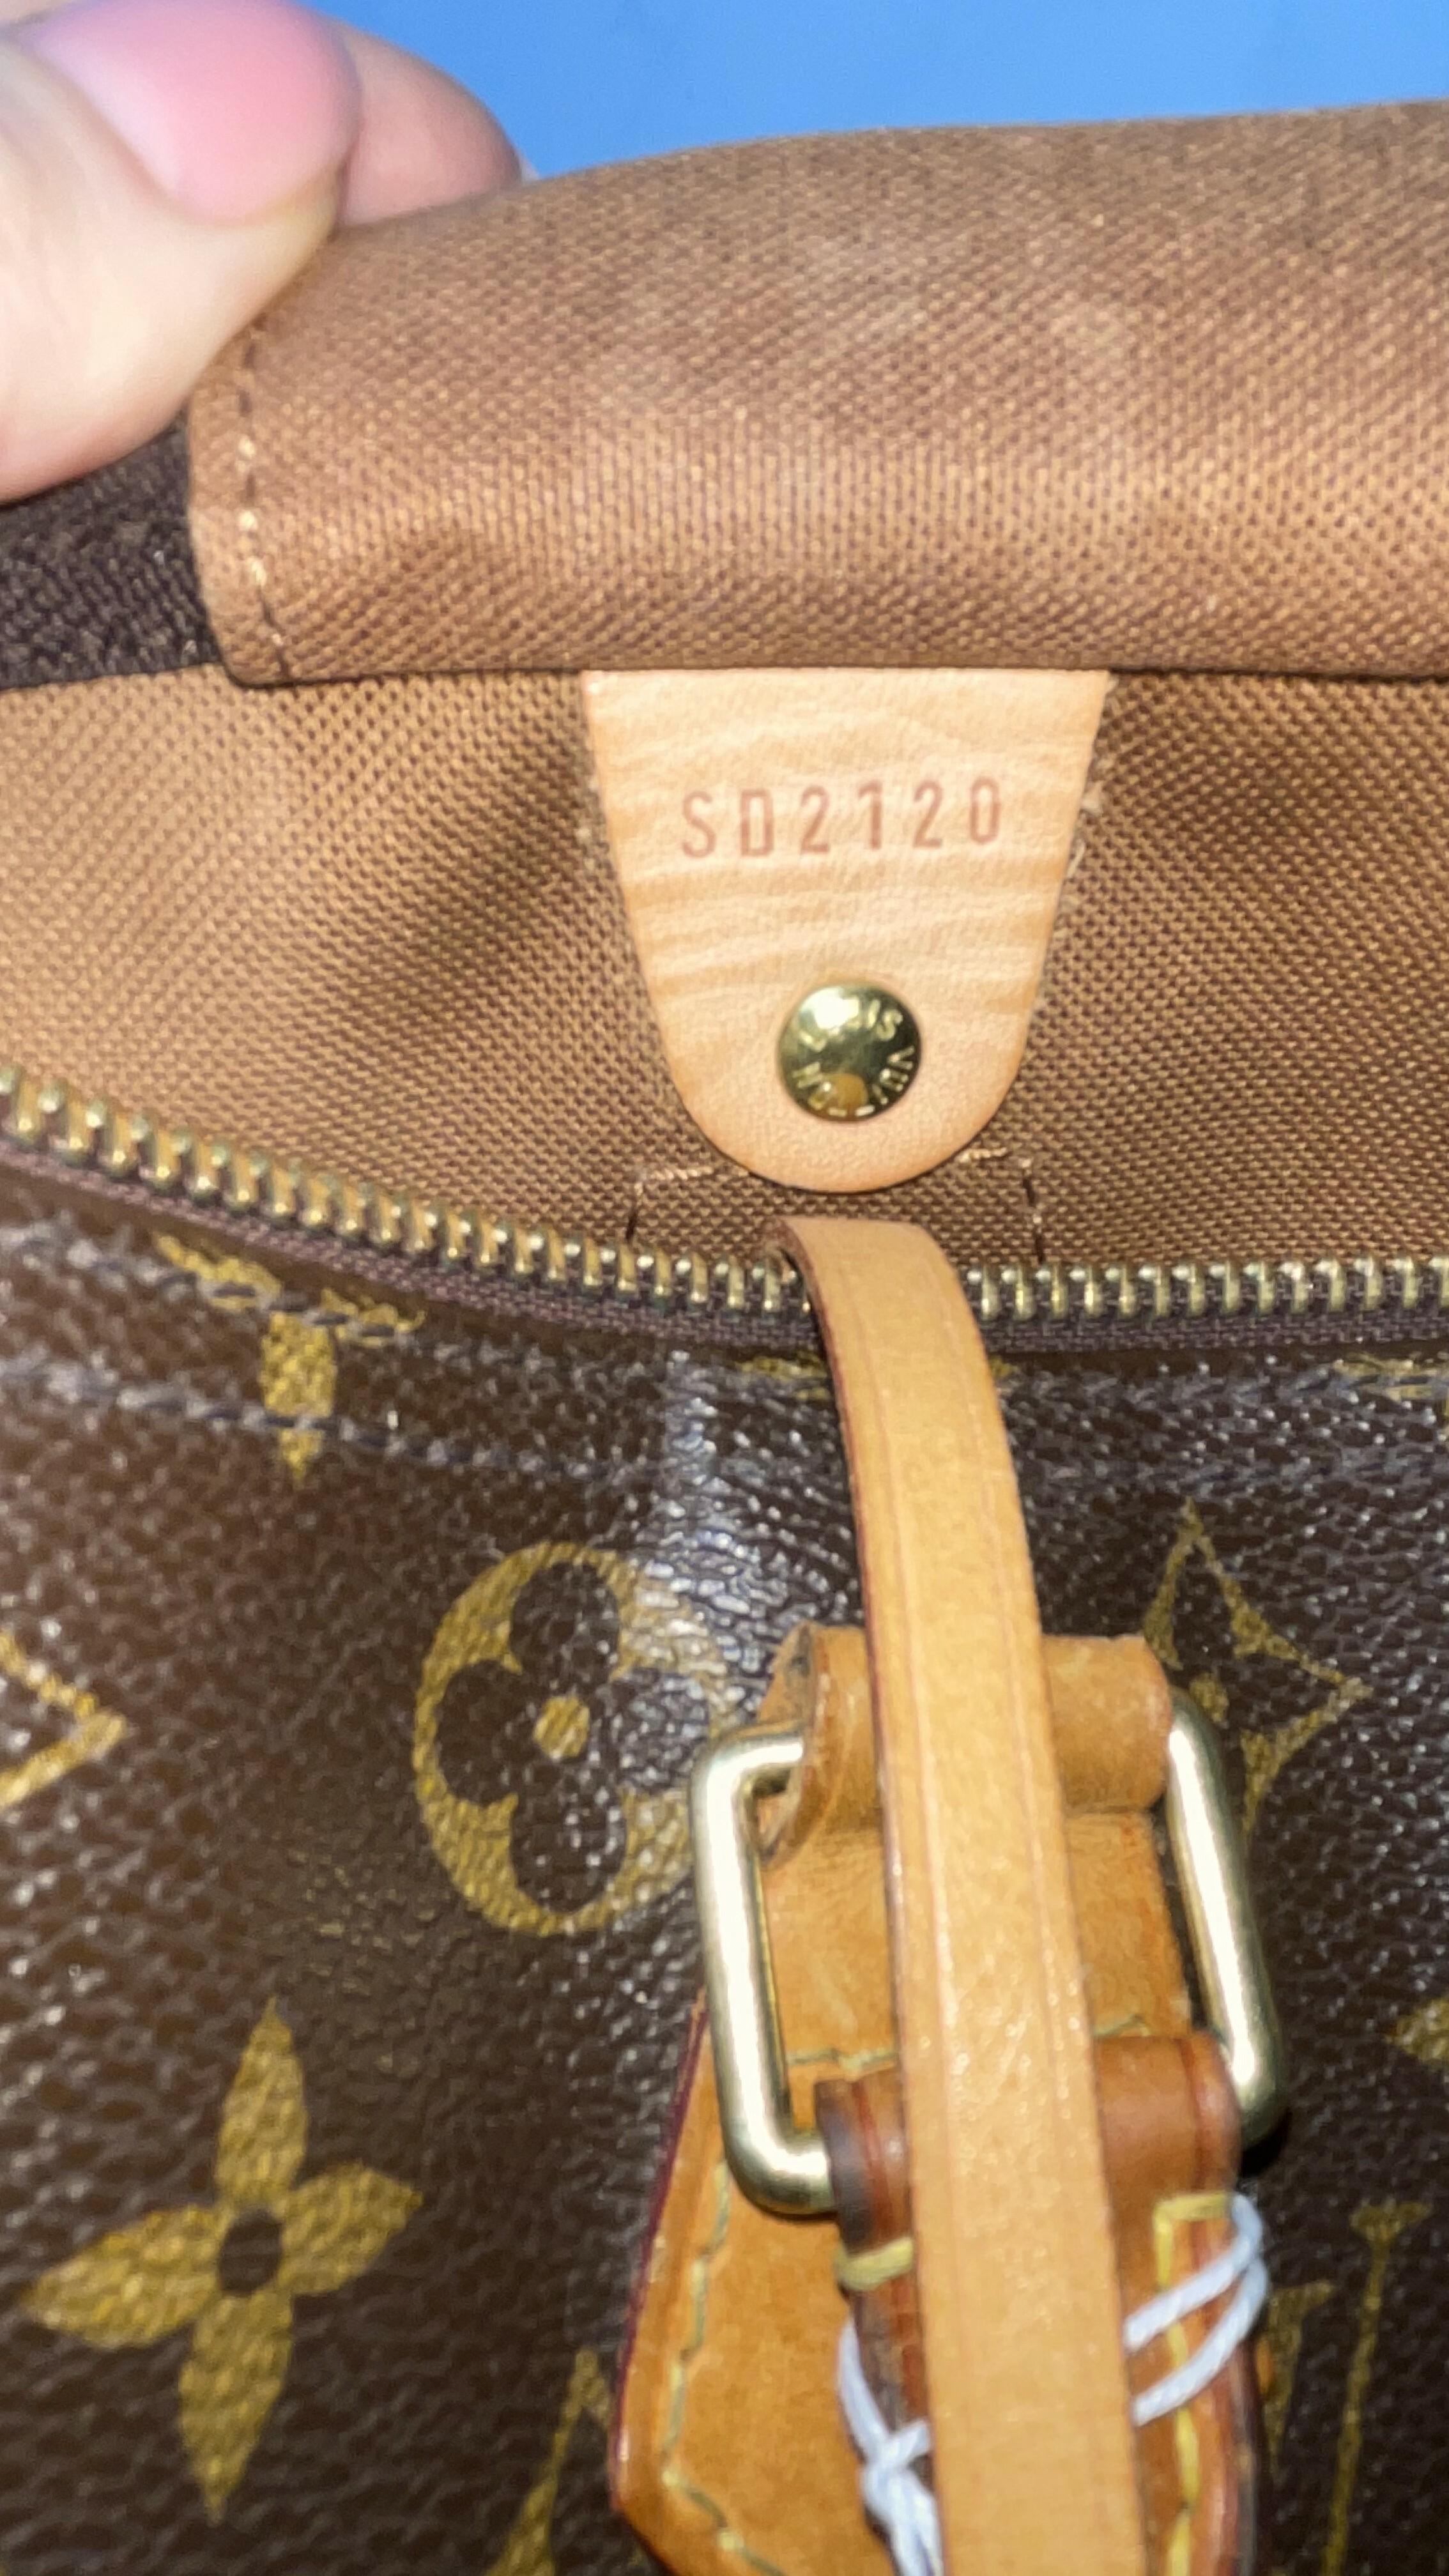 Louis Vuitton Takeoff Backpack, Khaki Green Leather, Preowned No Dustbag  WA001 - Julia Rose Boston